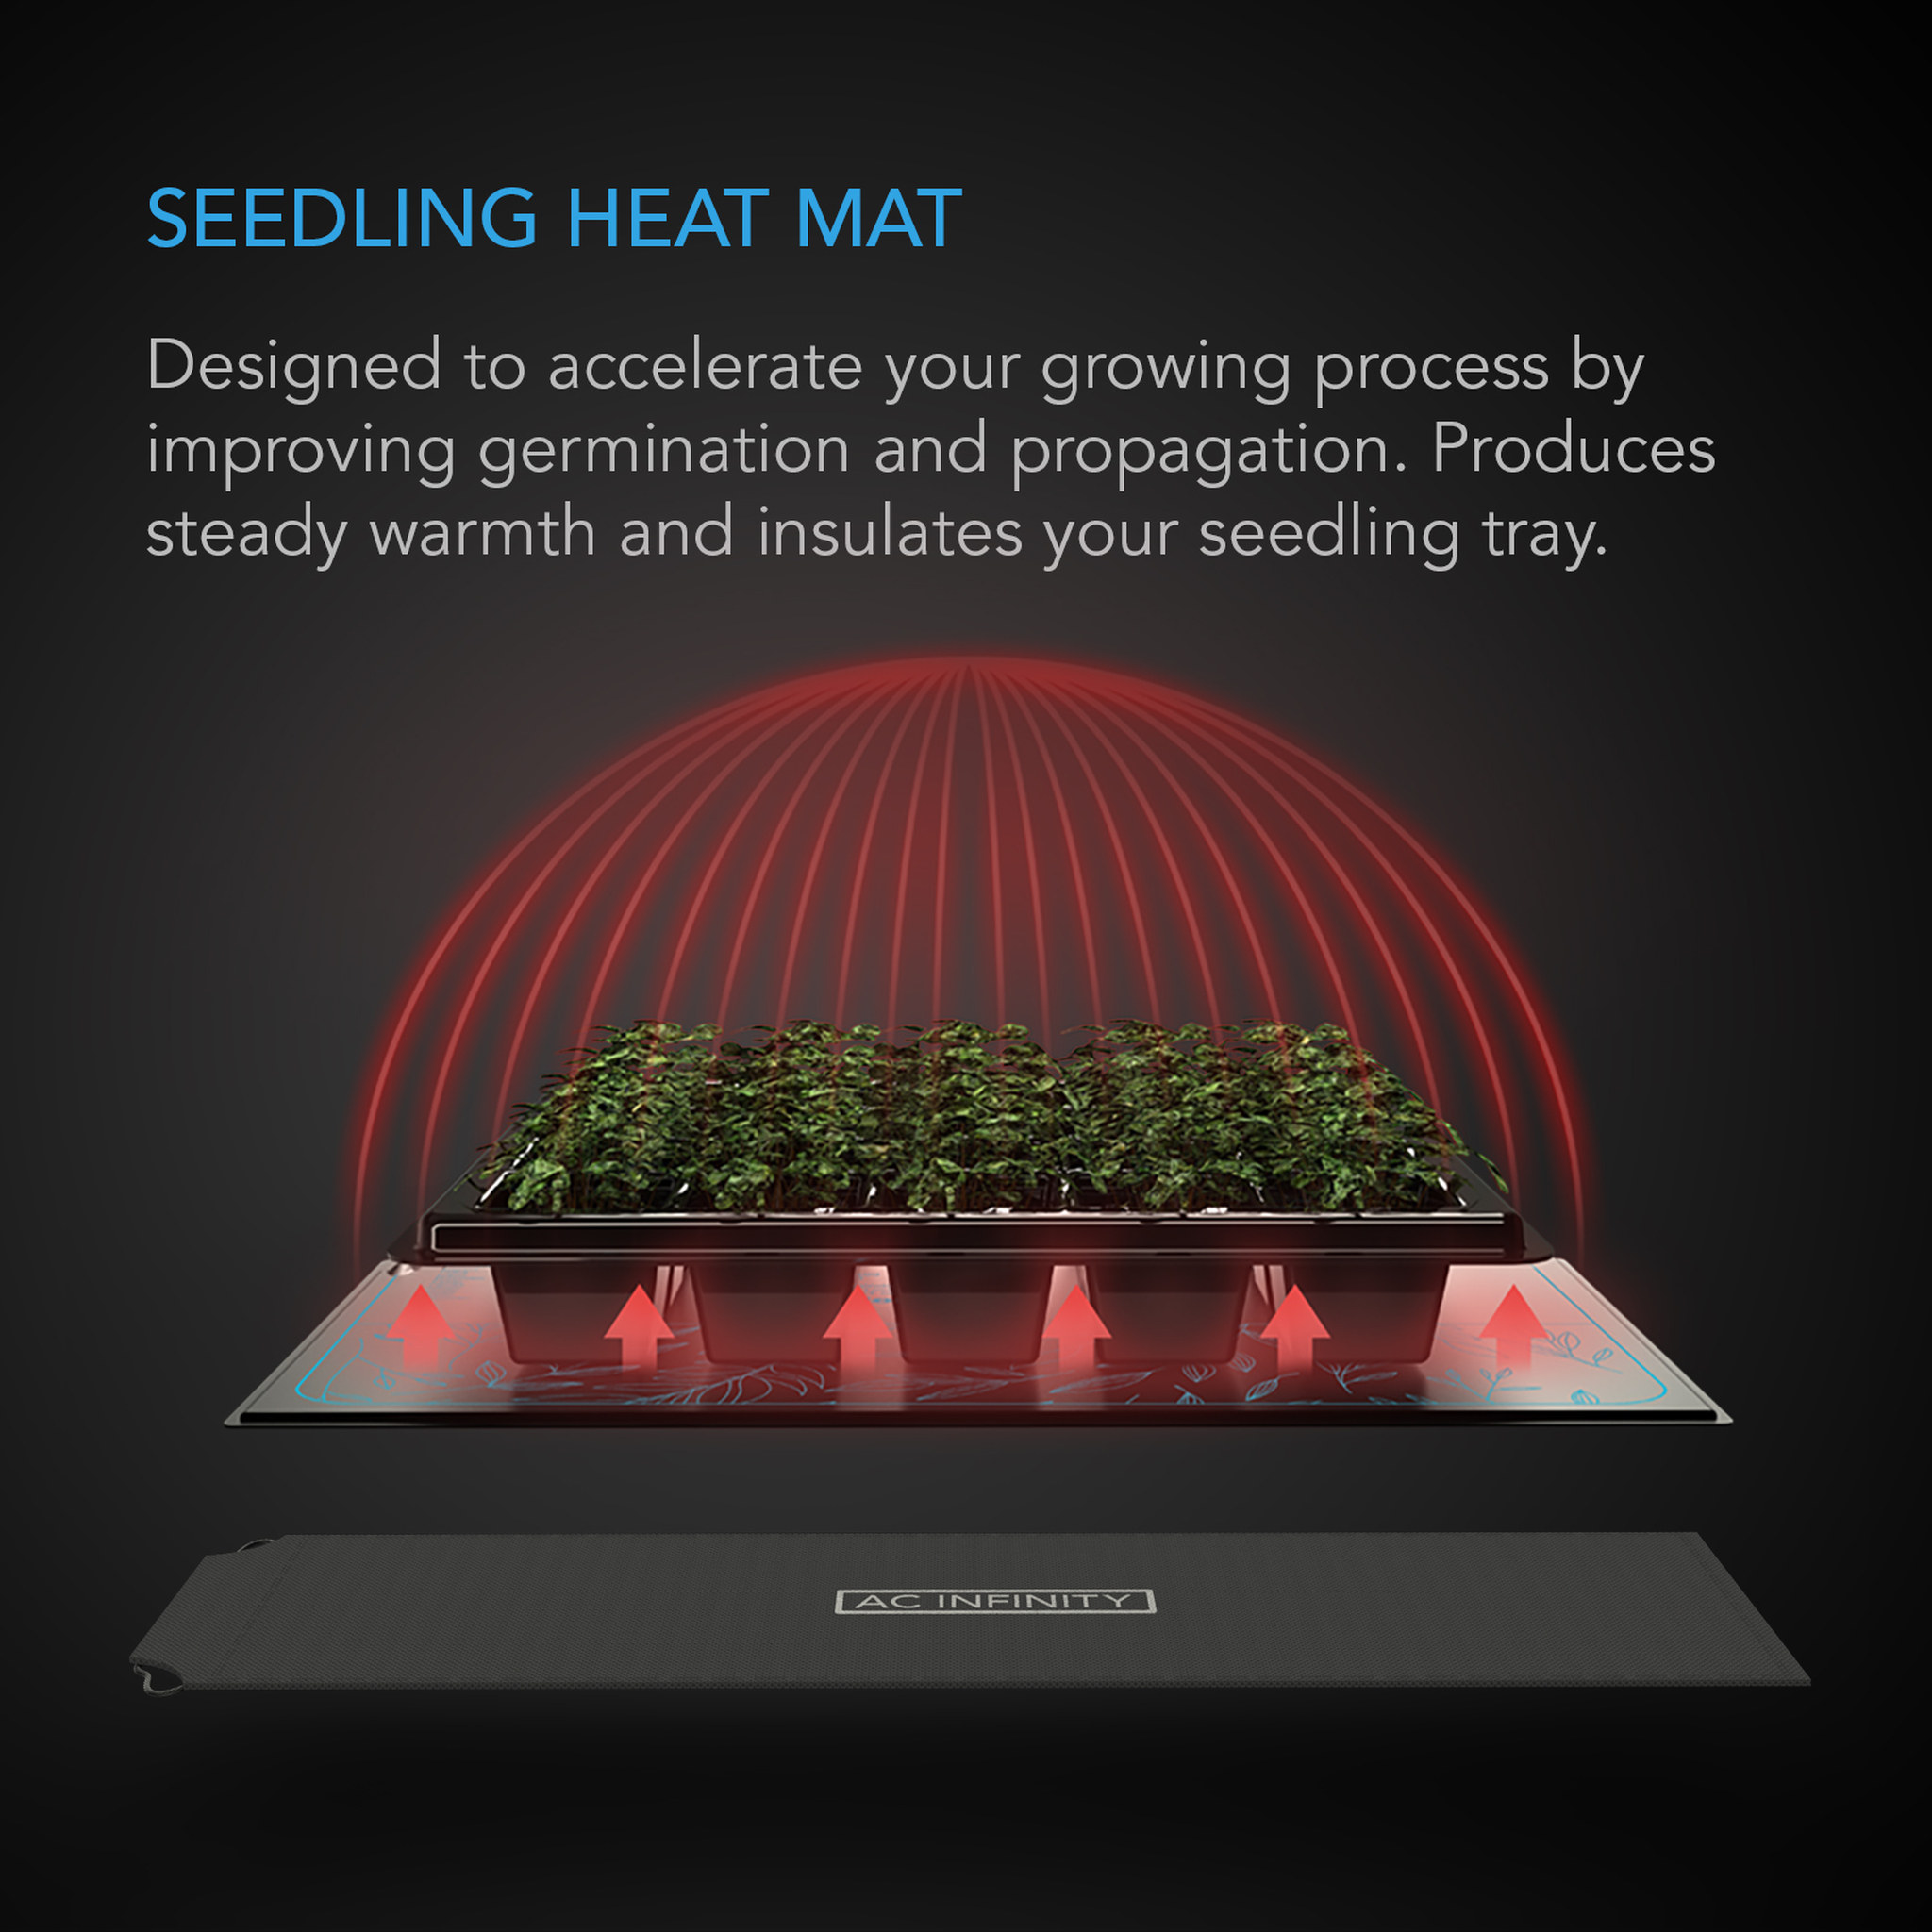 Seedling heat mat information